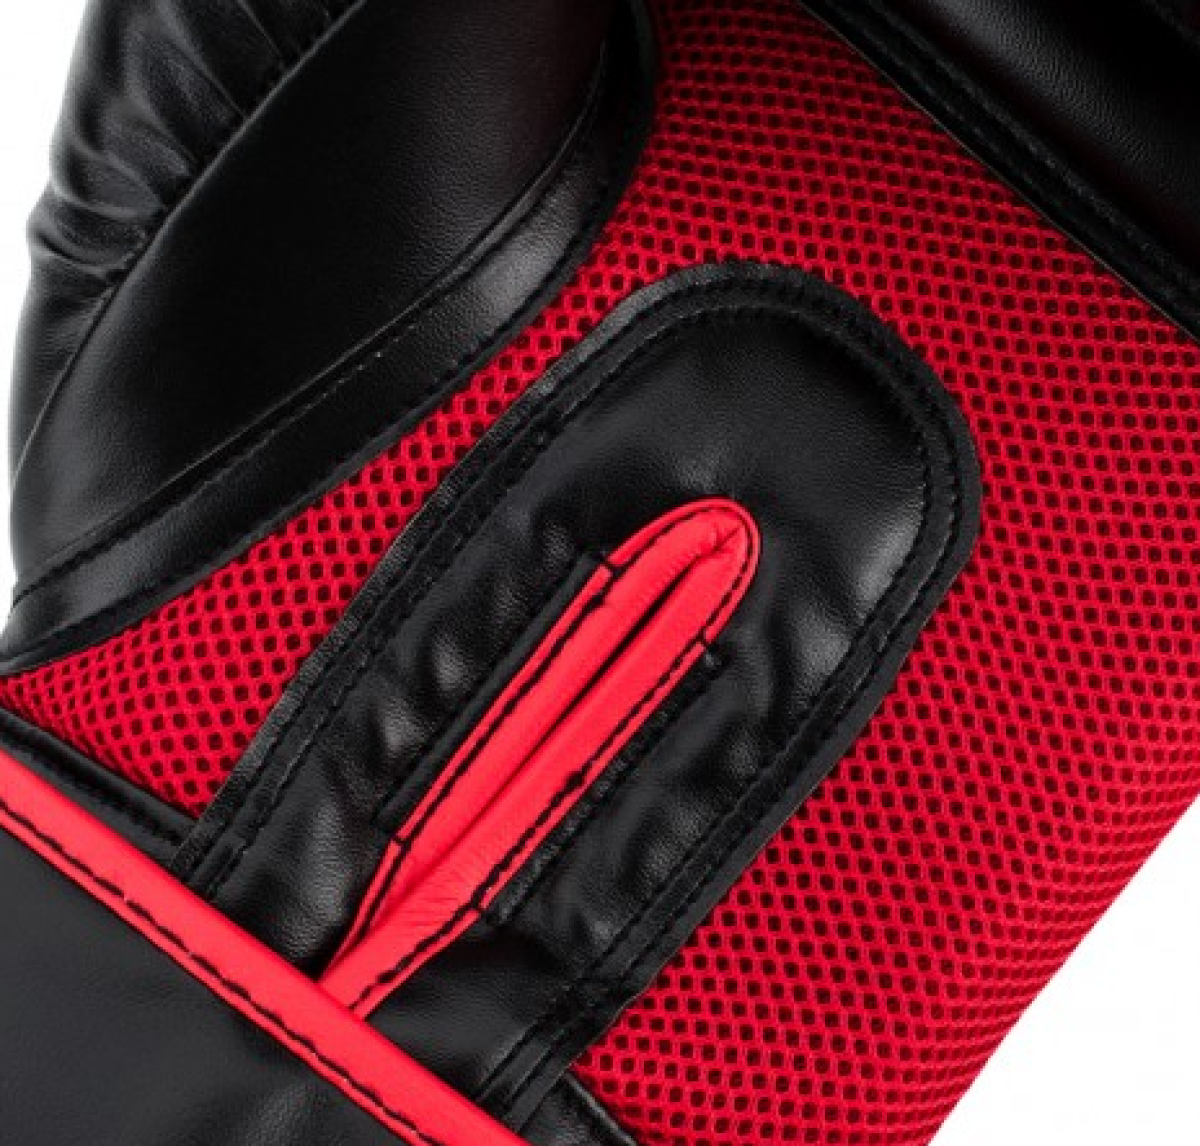 UFCContender MuayThai StyleTrainingGloves red/black